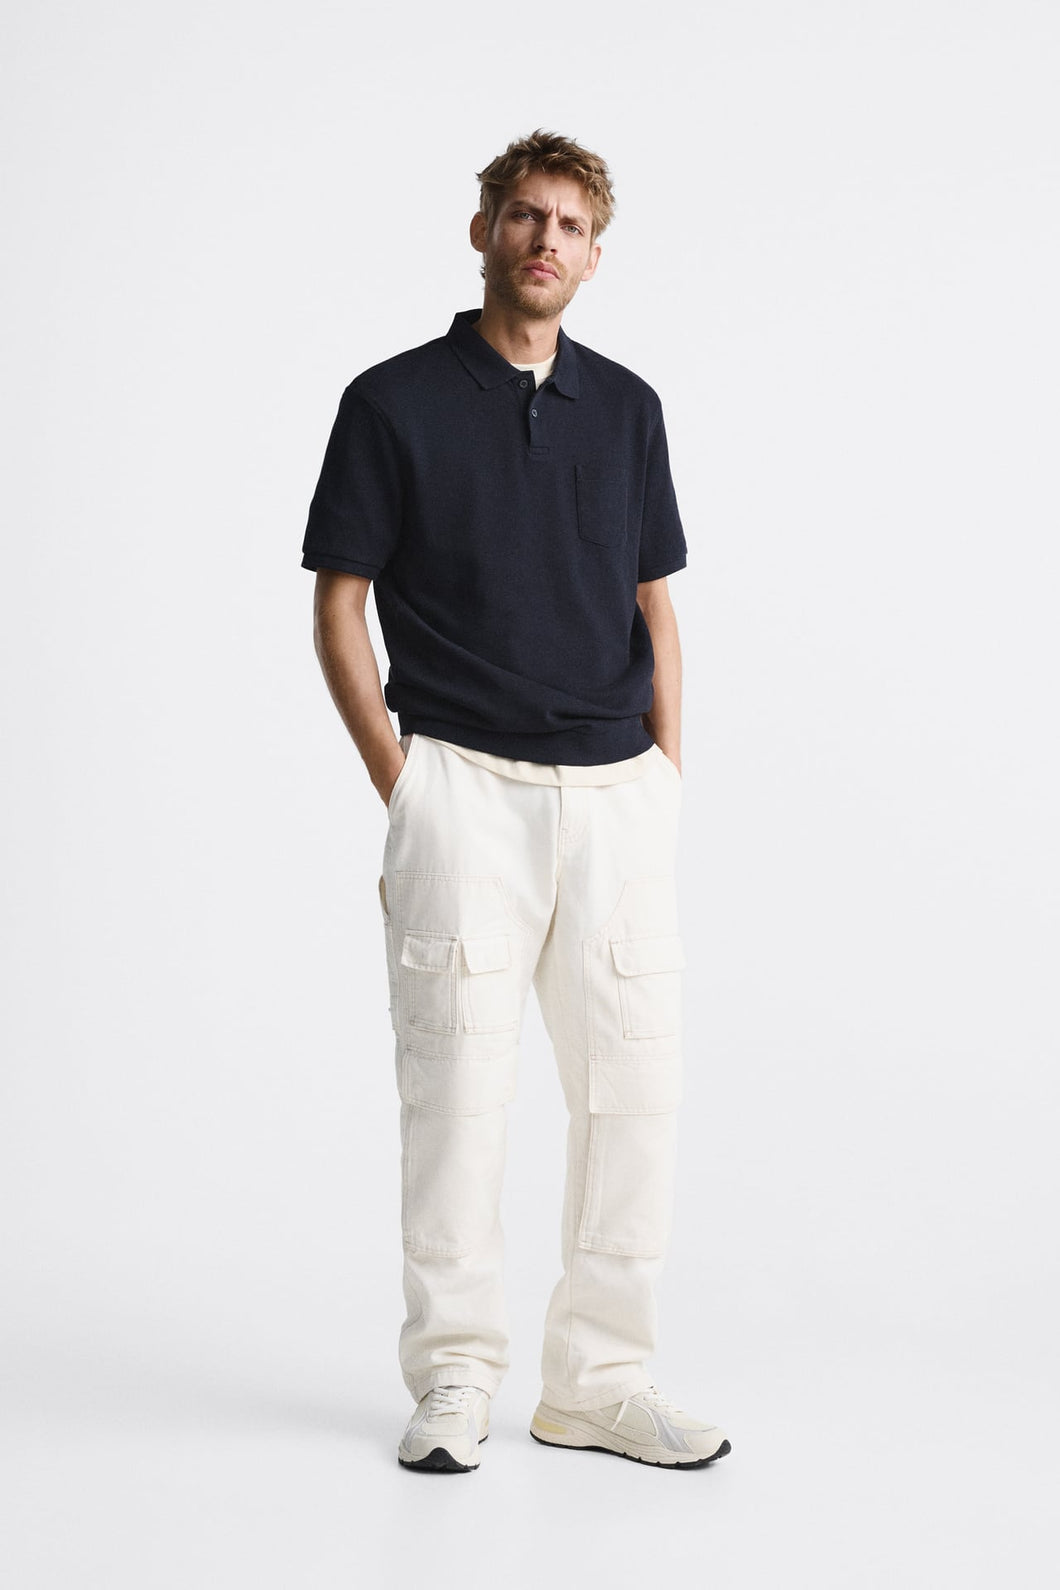 Zara Textured Polo Shirt Navy